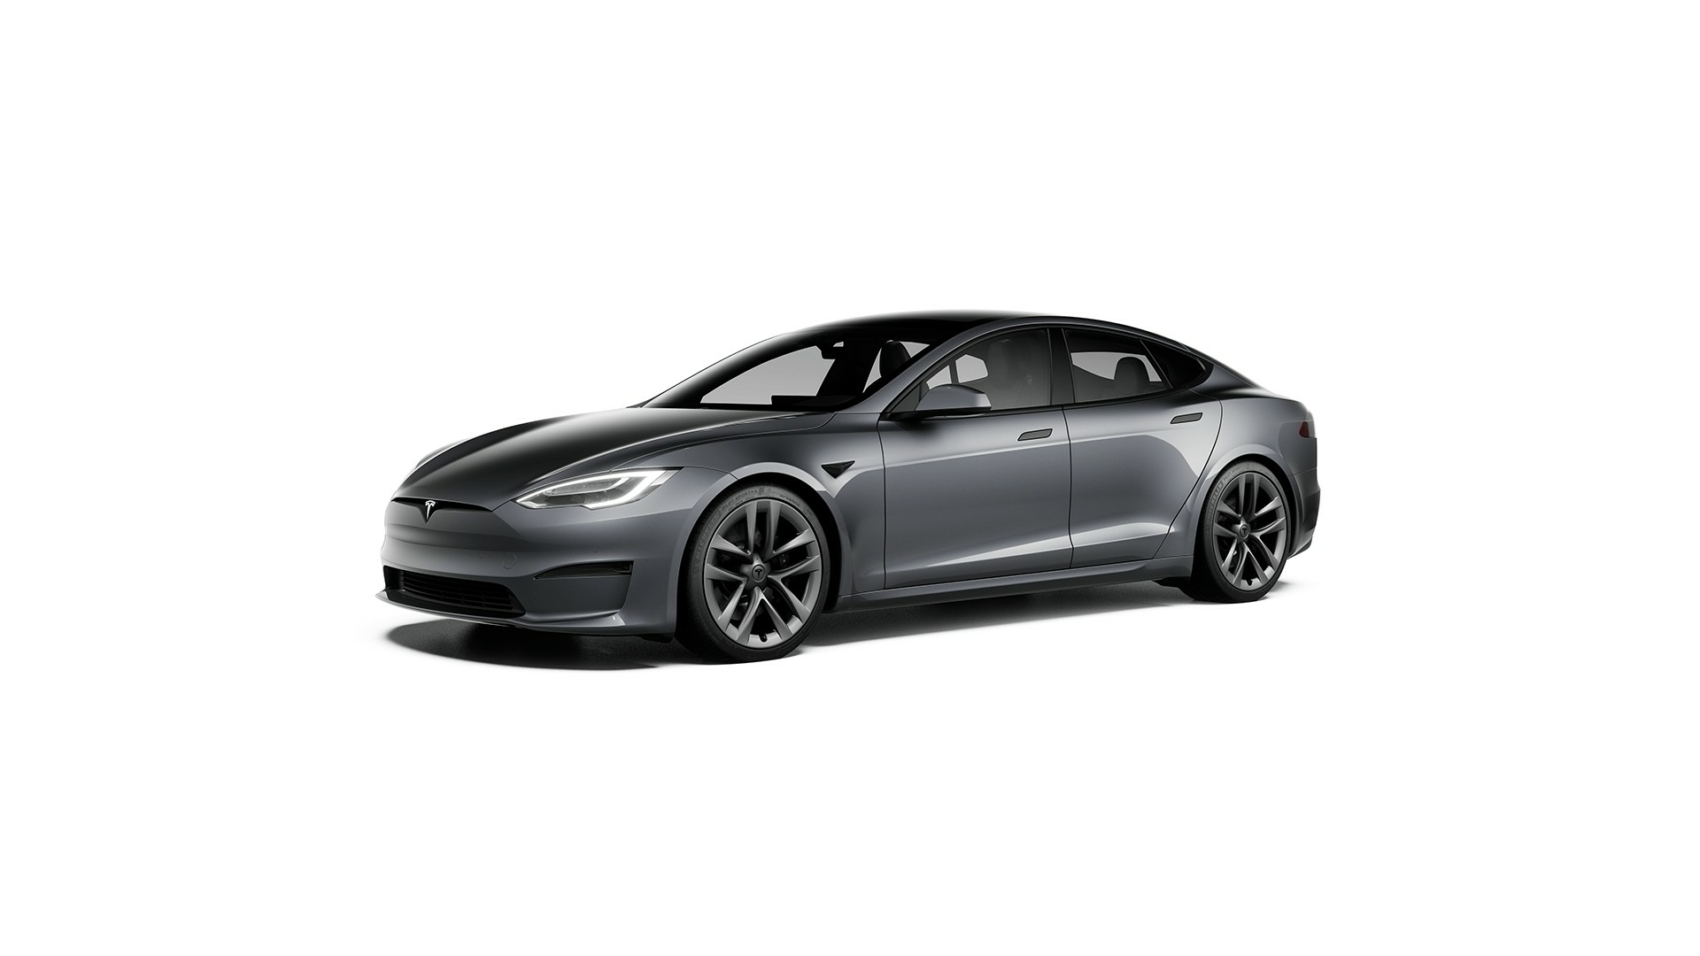 Image provided by Tesla Inc.